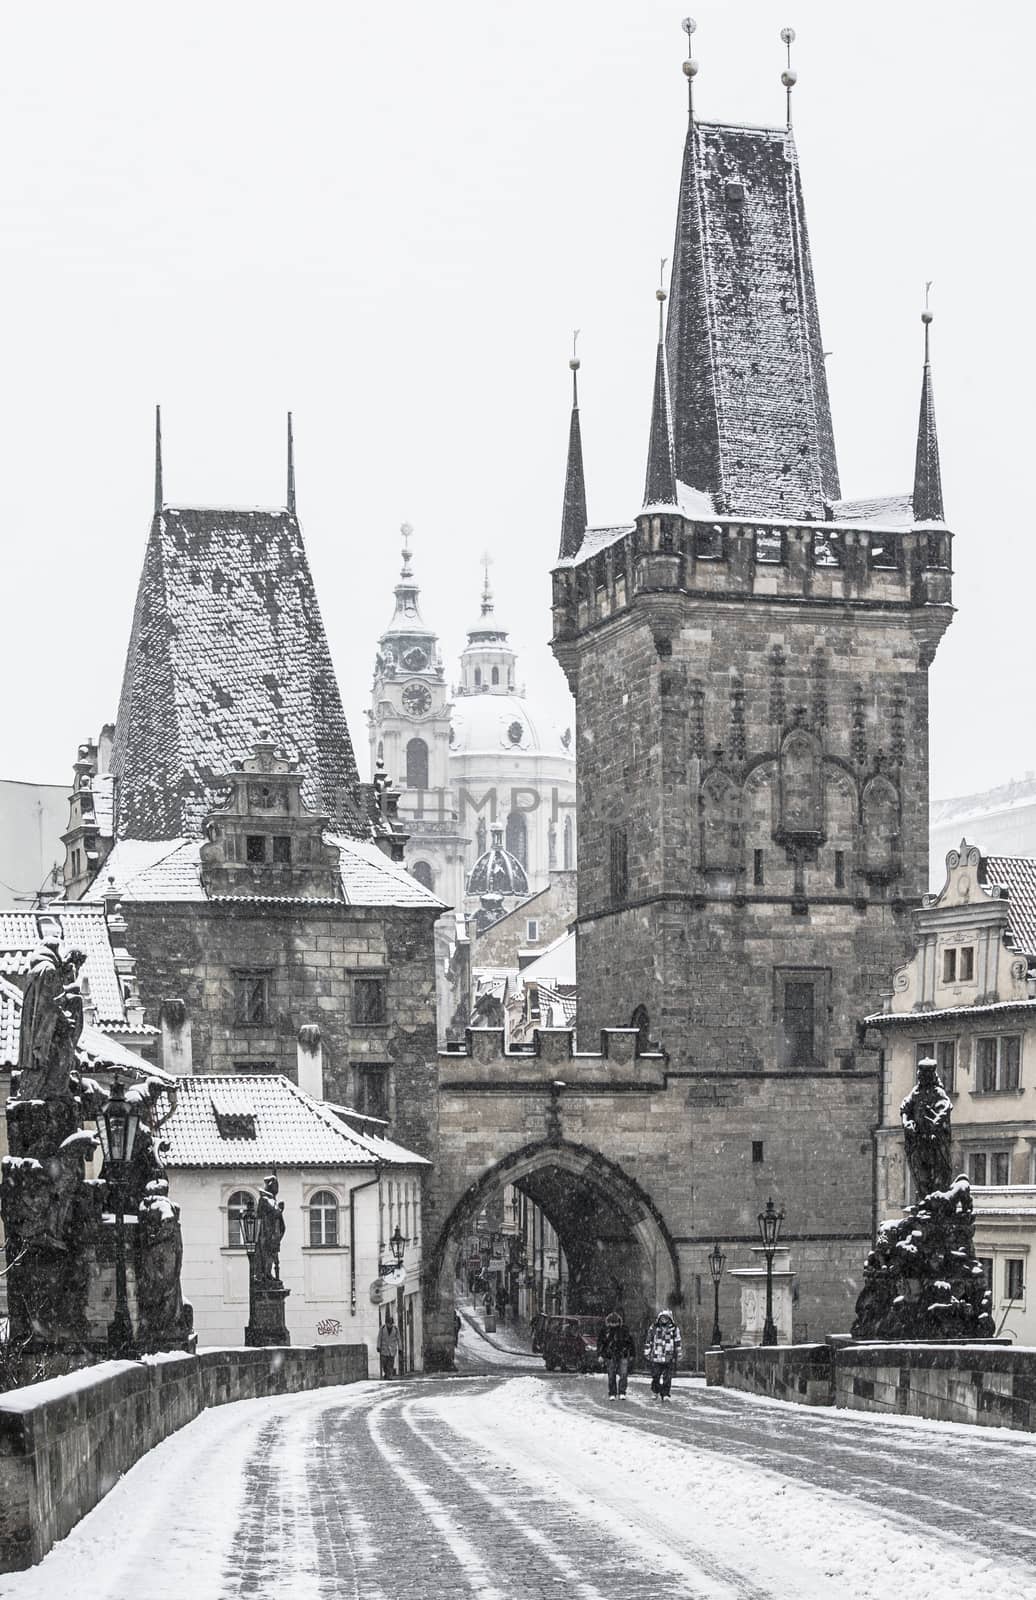 Charles bridge in winter, Prague, Czech Republic
